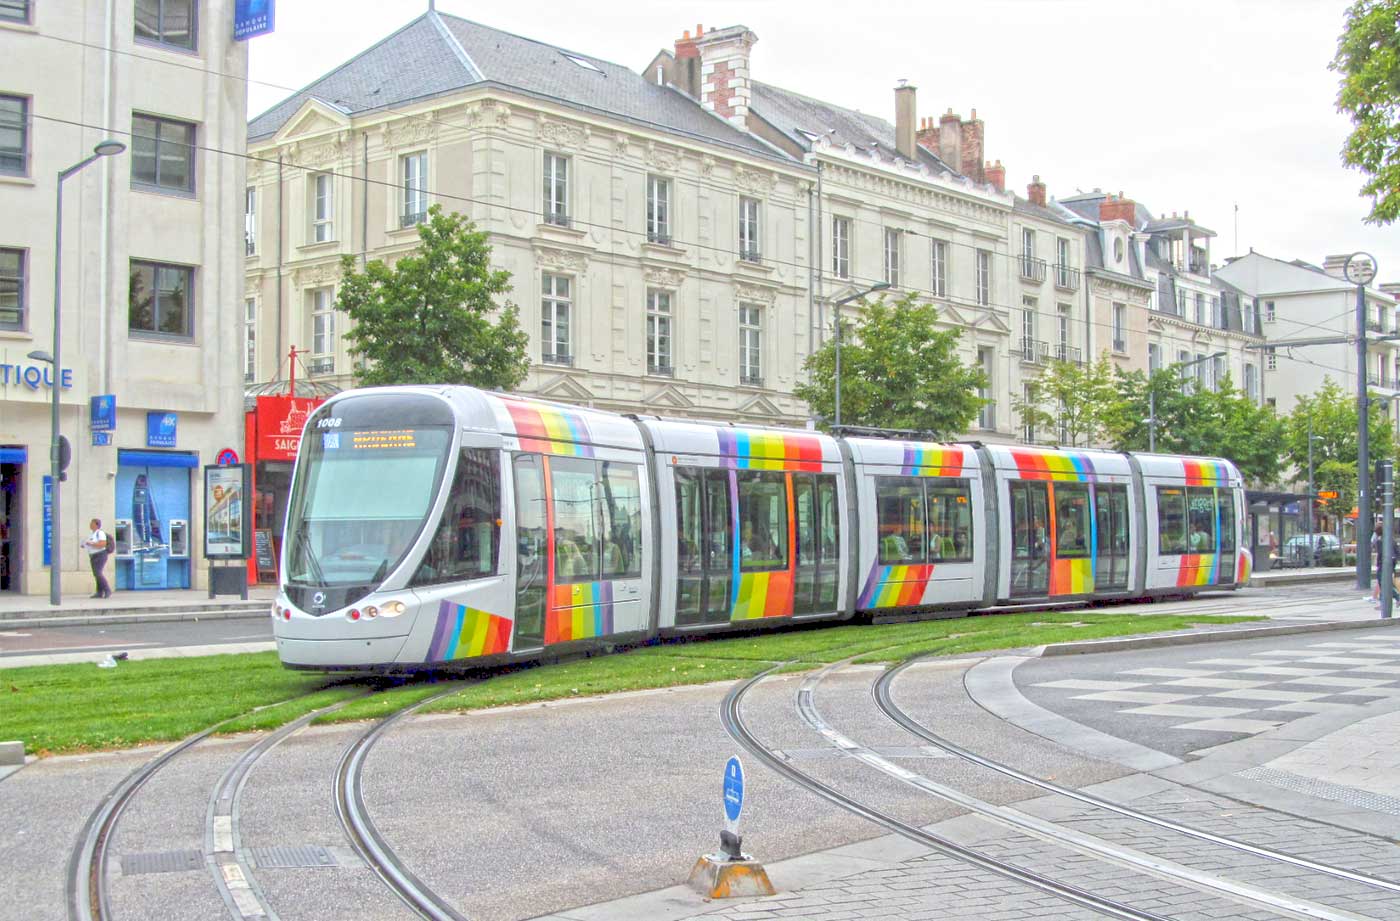 Angers Tram - Public Transport